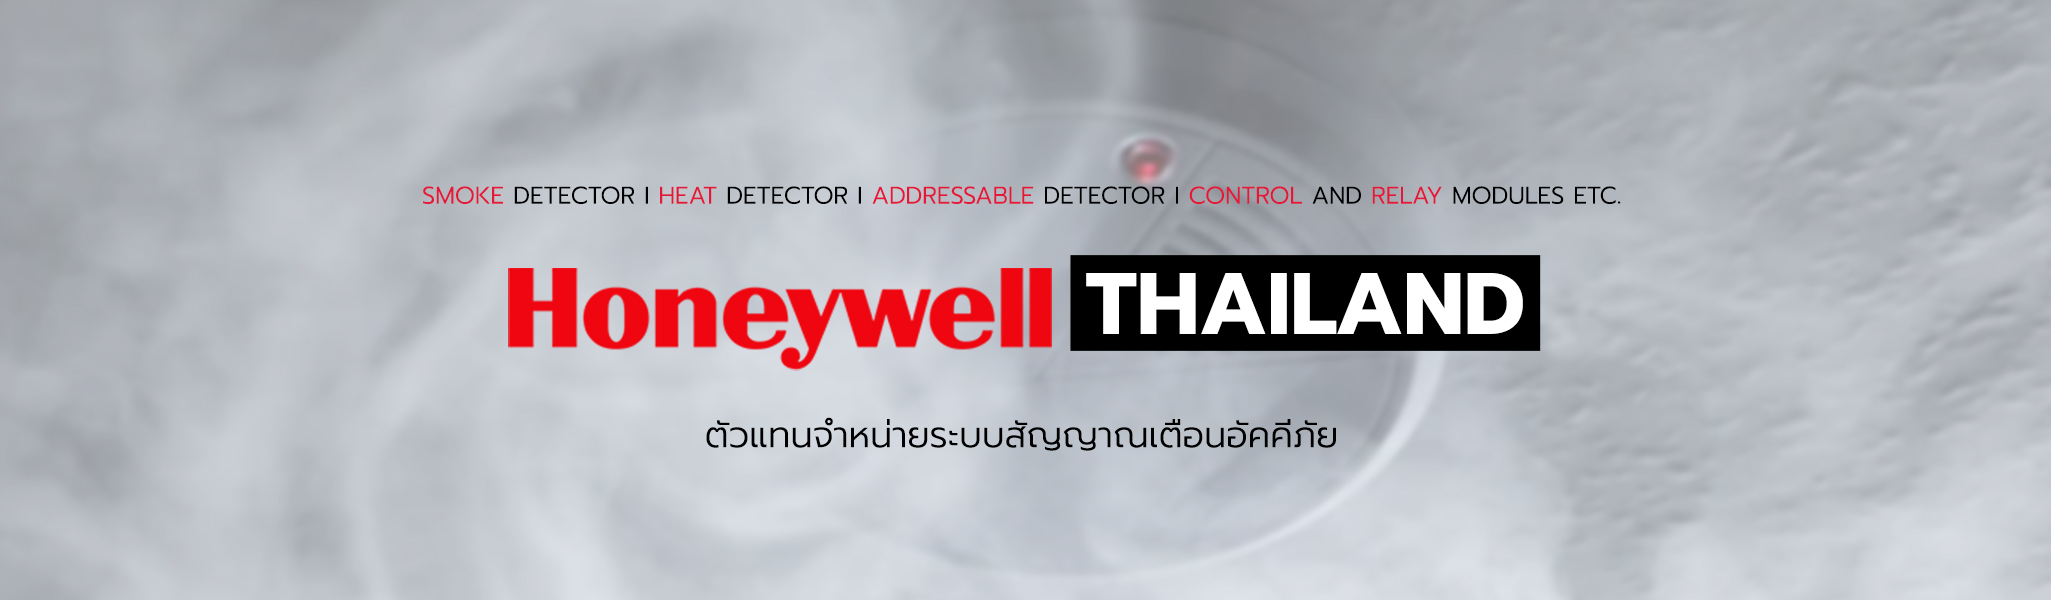 Honeywell Thailand